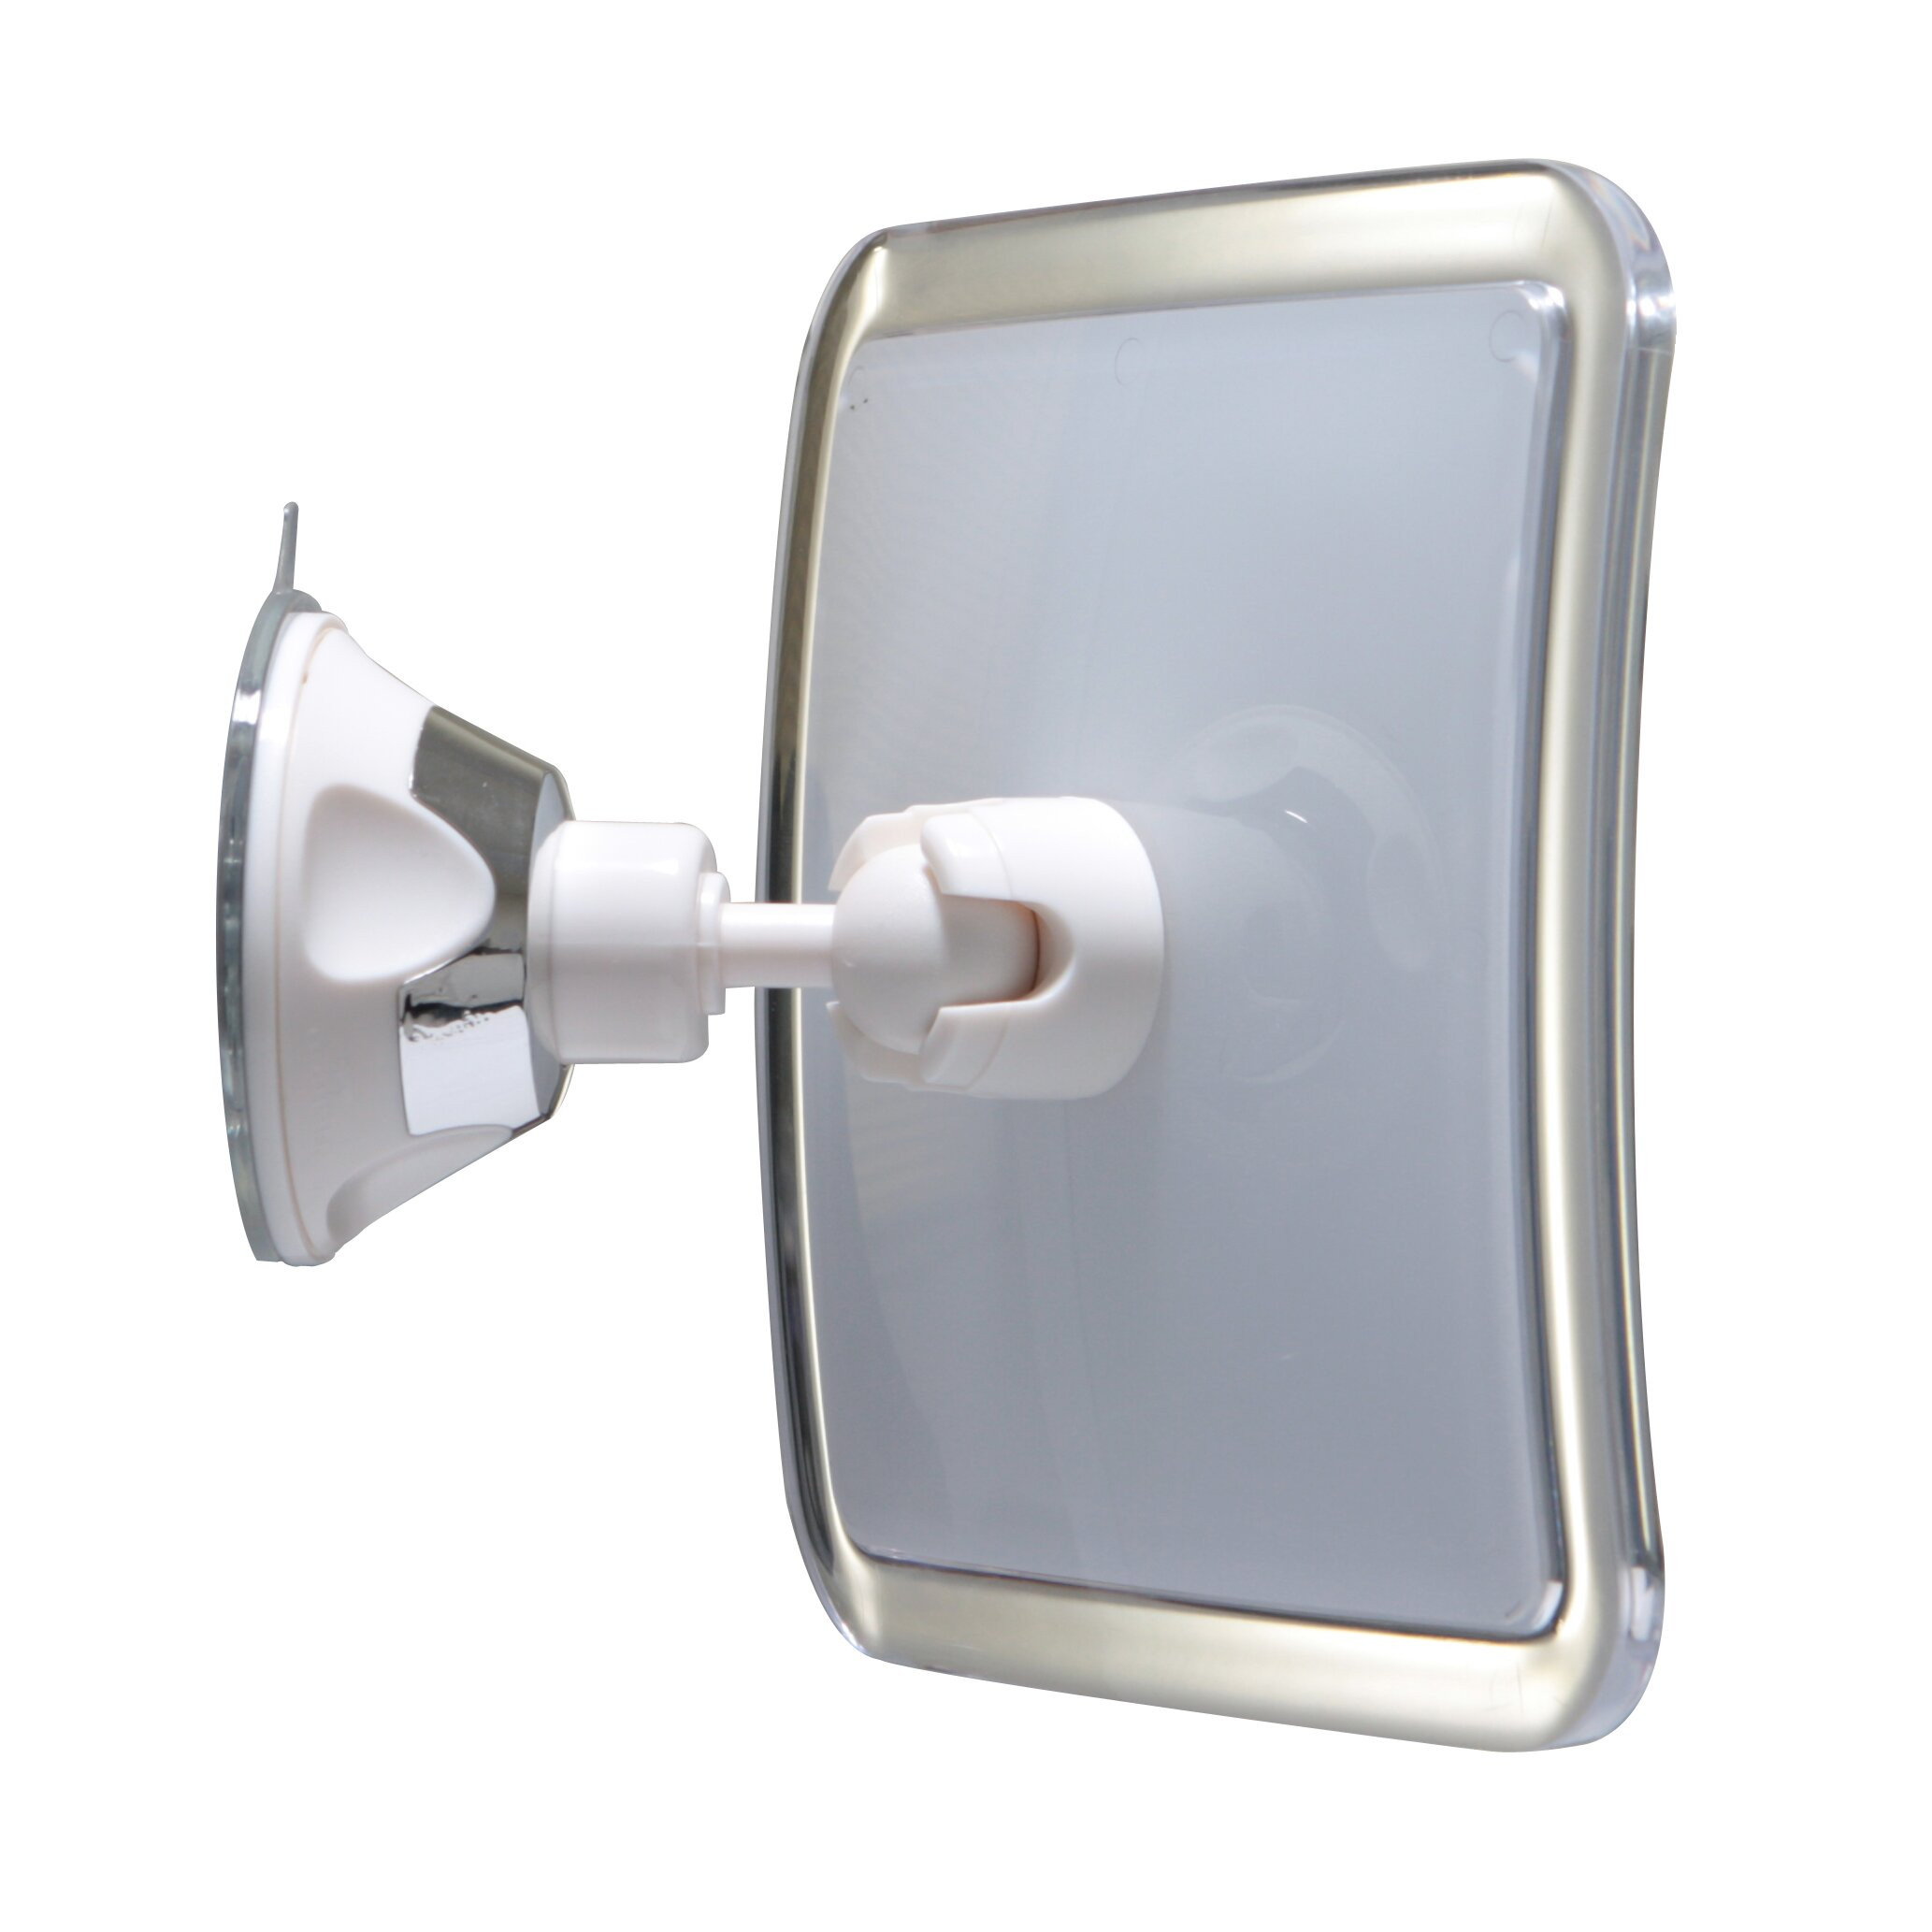 Swivel Bathroom Mirror
 Zadro Z Swivel 10X Magnification Wall Mount Mirror